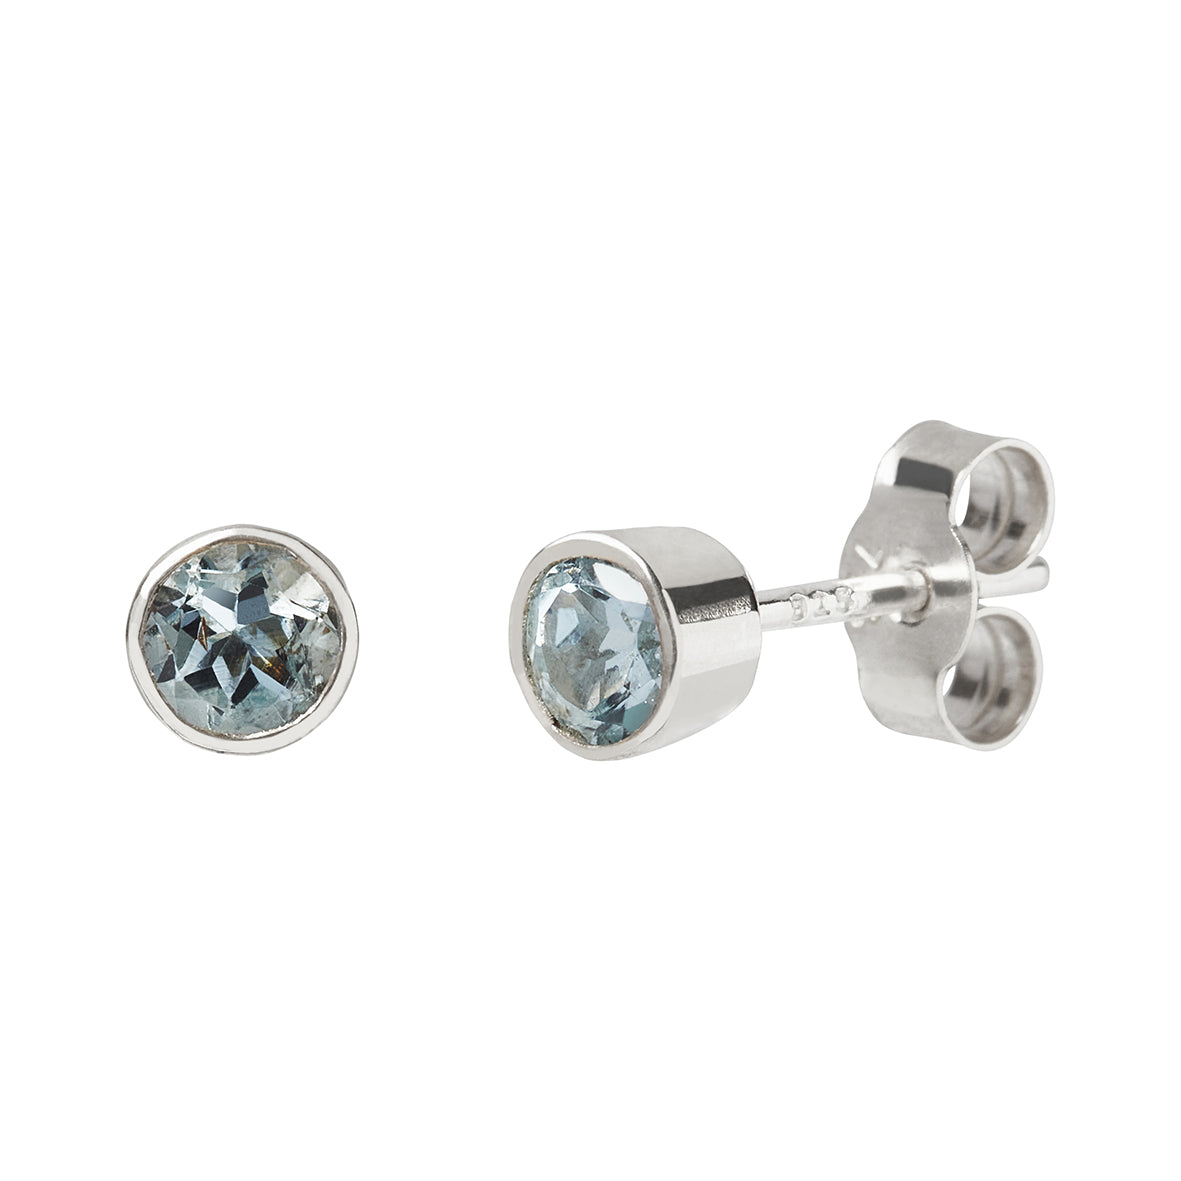 Aquamarine and Silver Stud Earrings